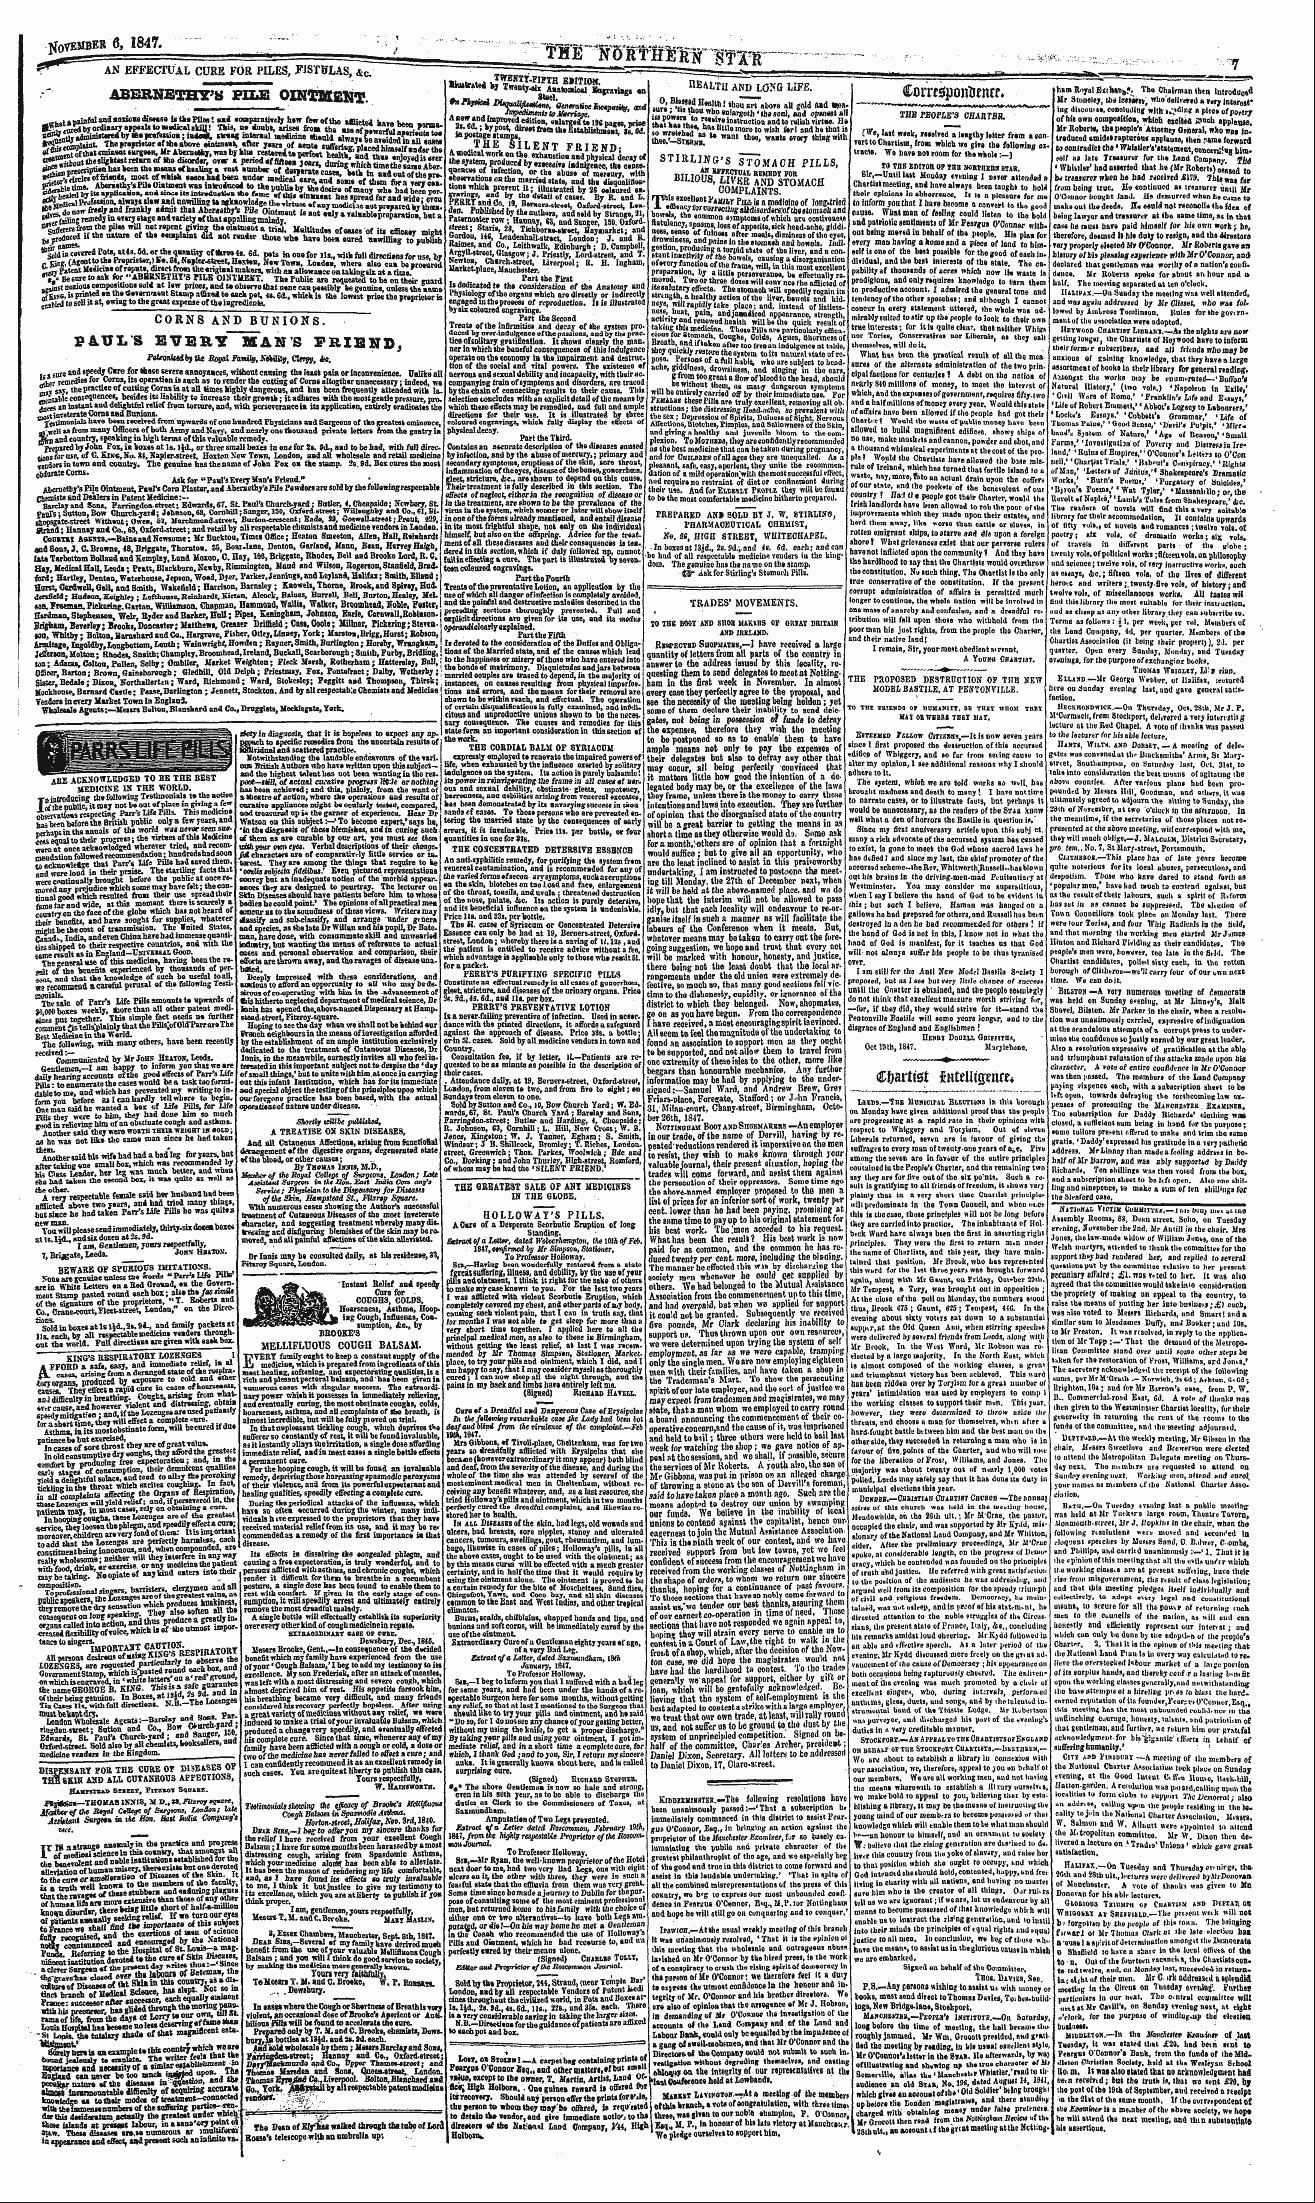 Northern Star (1837-1852): jS F Y, 3rd edition - Ad00717